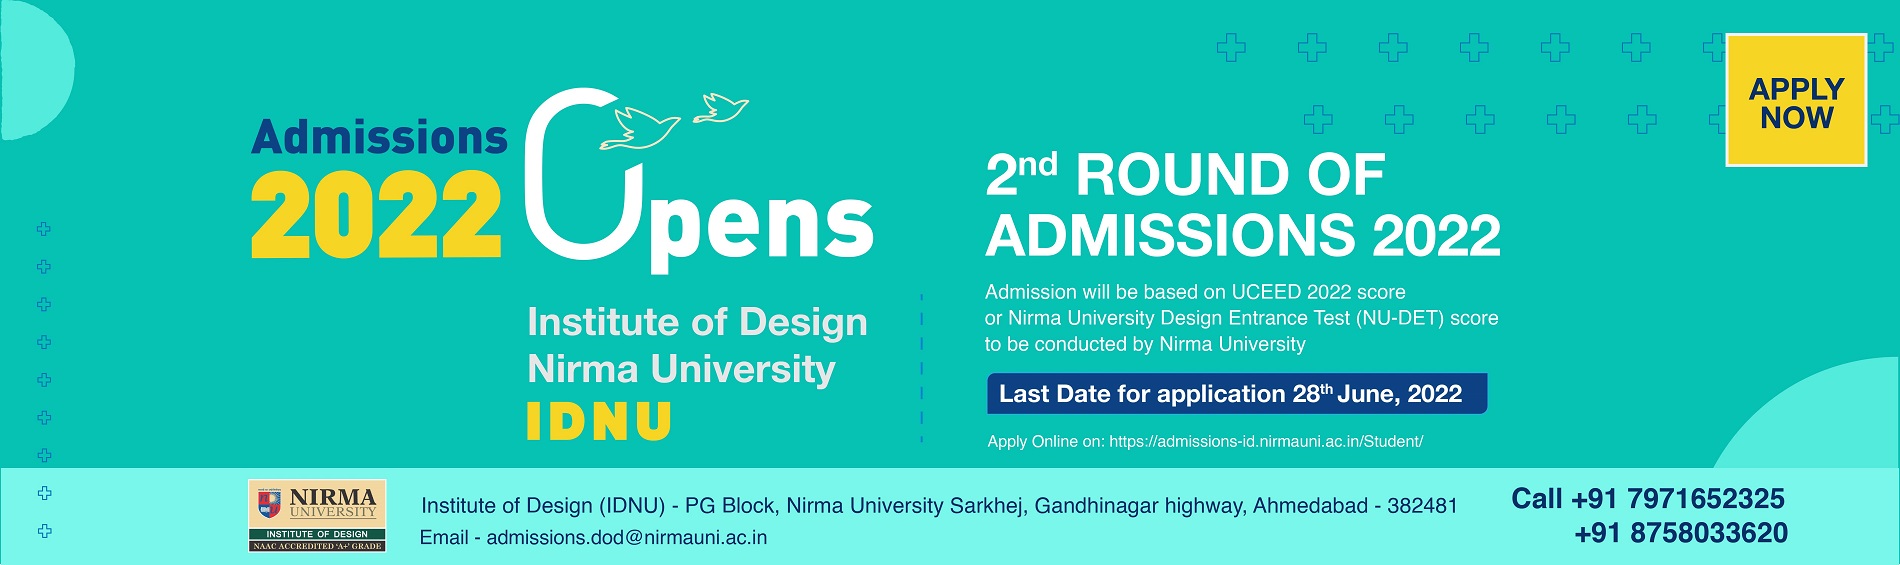 Bachelor of Design Admissions